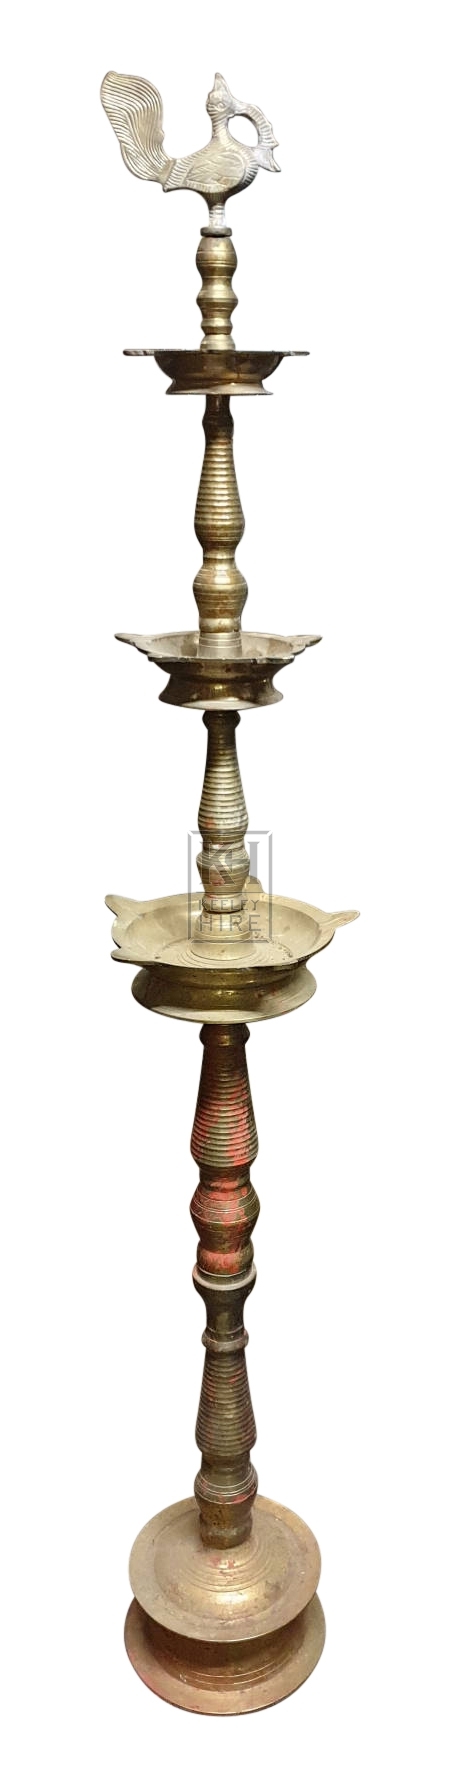 Tall brass ornate oil lamp